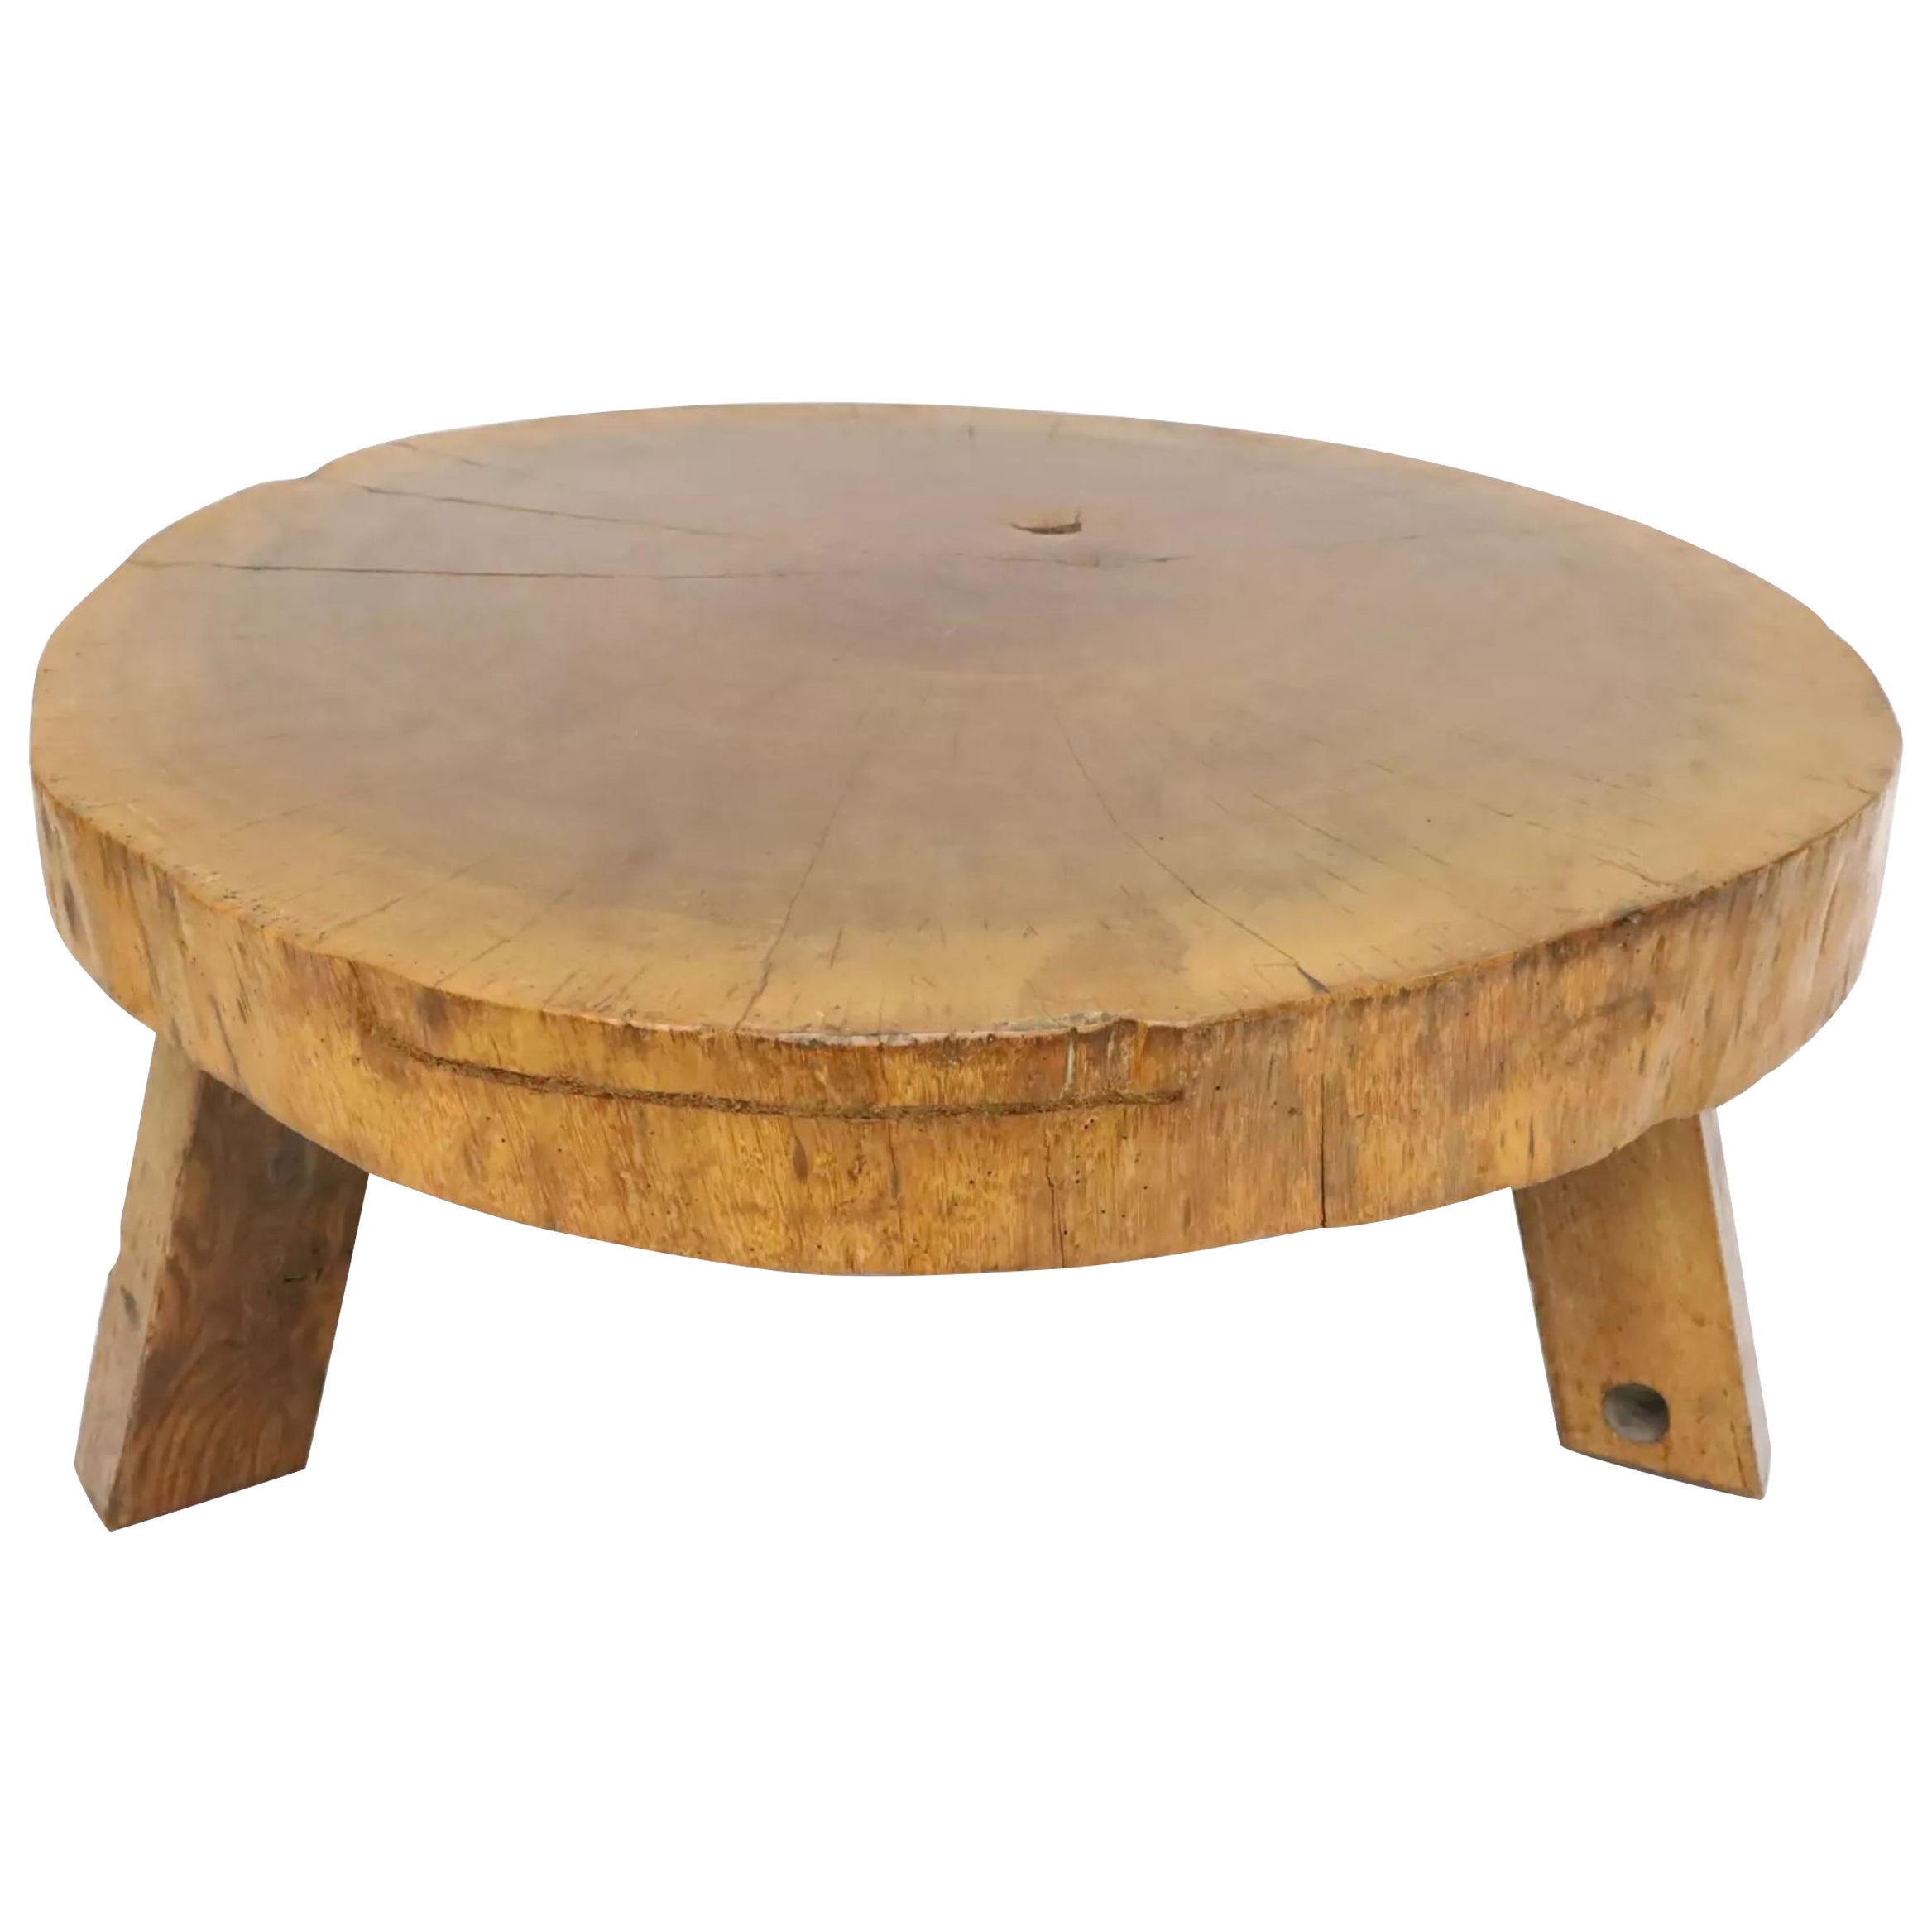 Wooden Coffee Table like Perriand, Chapo, Jeanneret, Tripod Base Wabi-Sabi 1940 For Sale